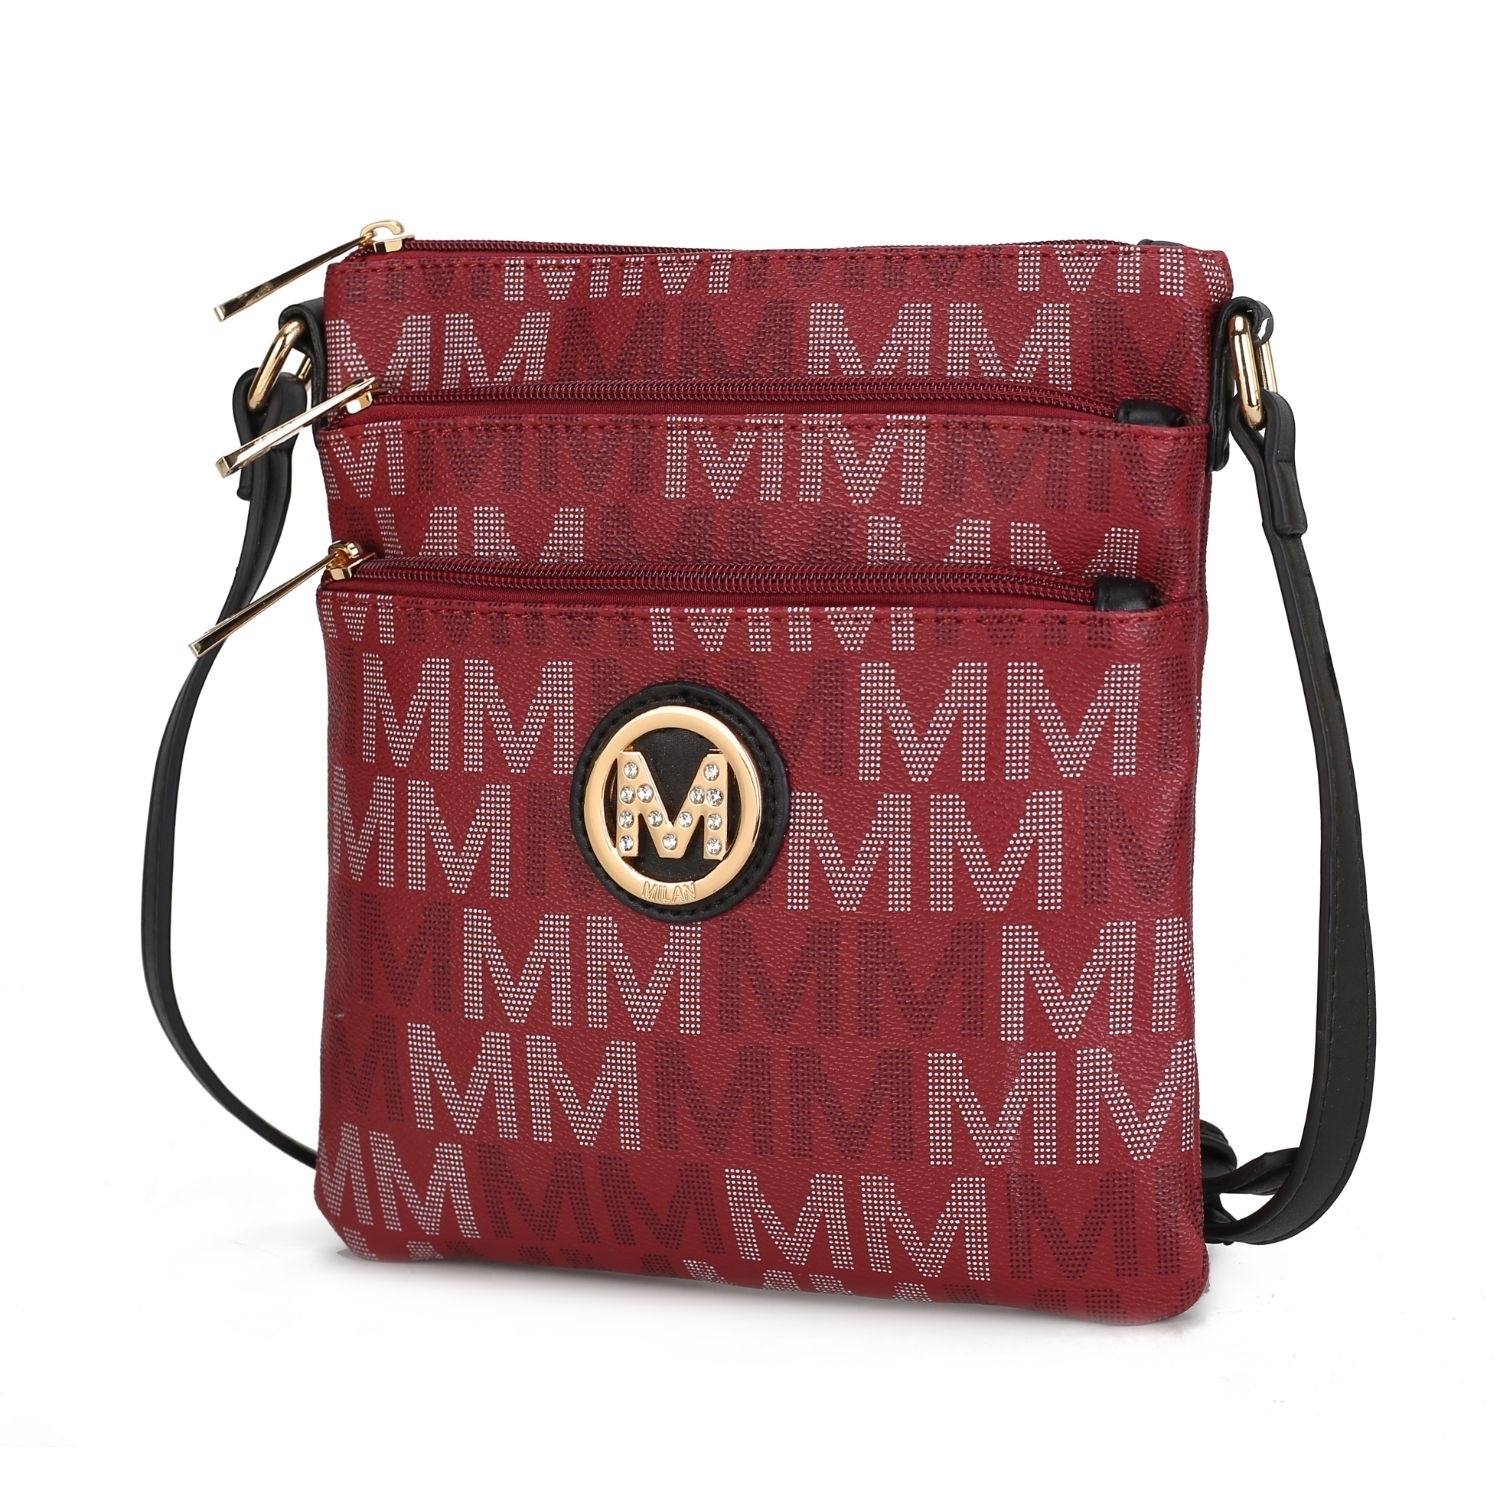 MKF Collection Lemuel M Signature Crossbody Handbag By Mia K. - Burgundy